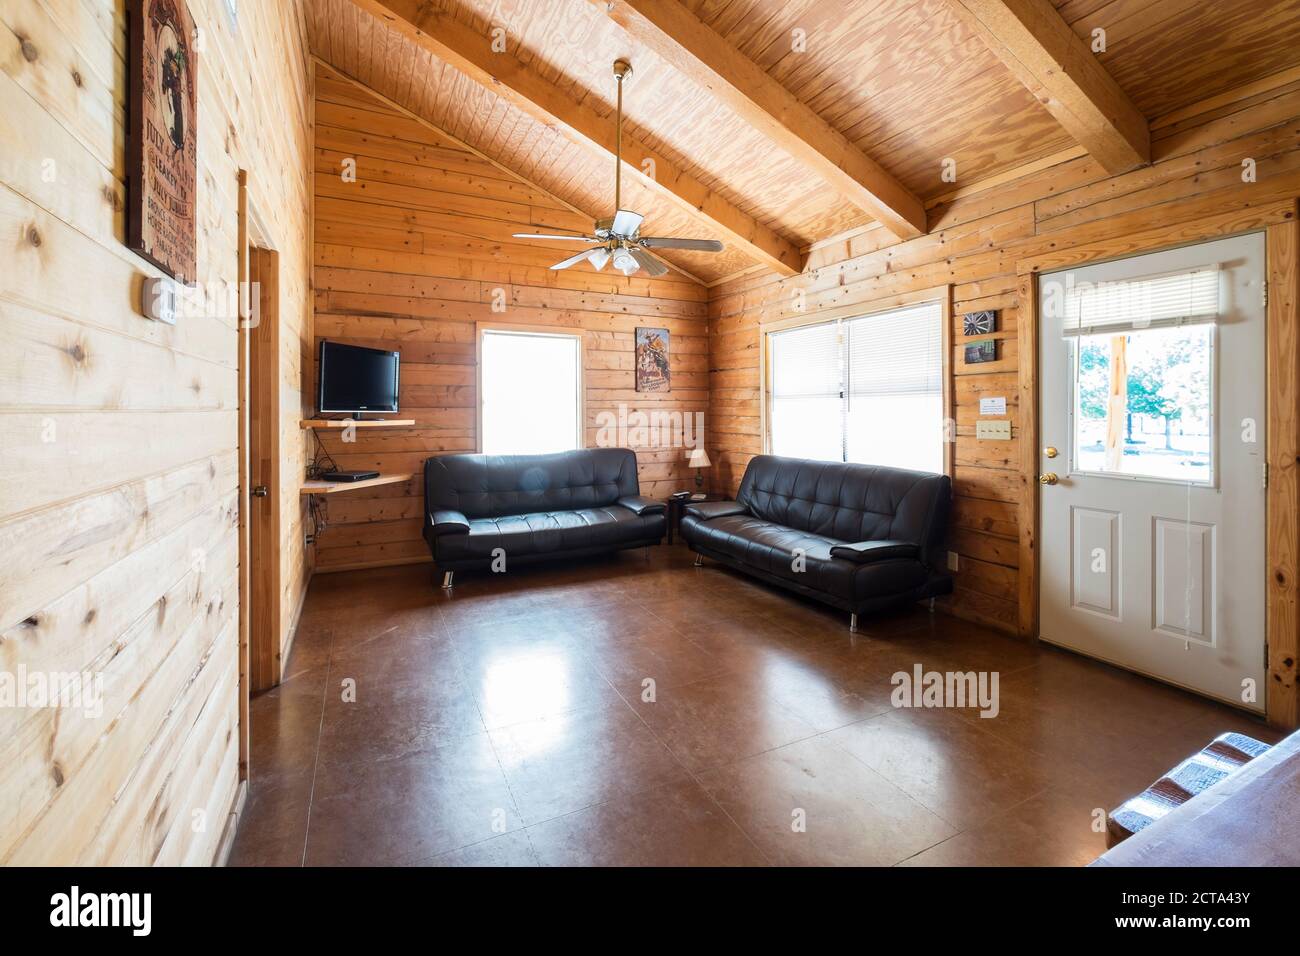 USA, Texas, Log home interior Stock Photo